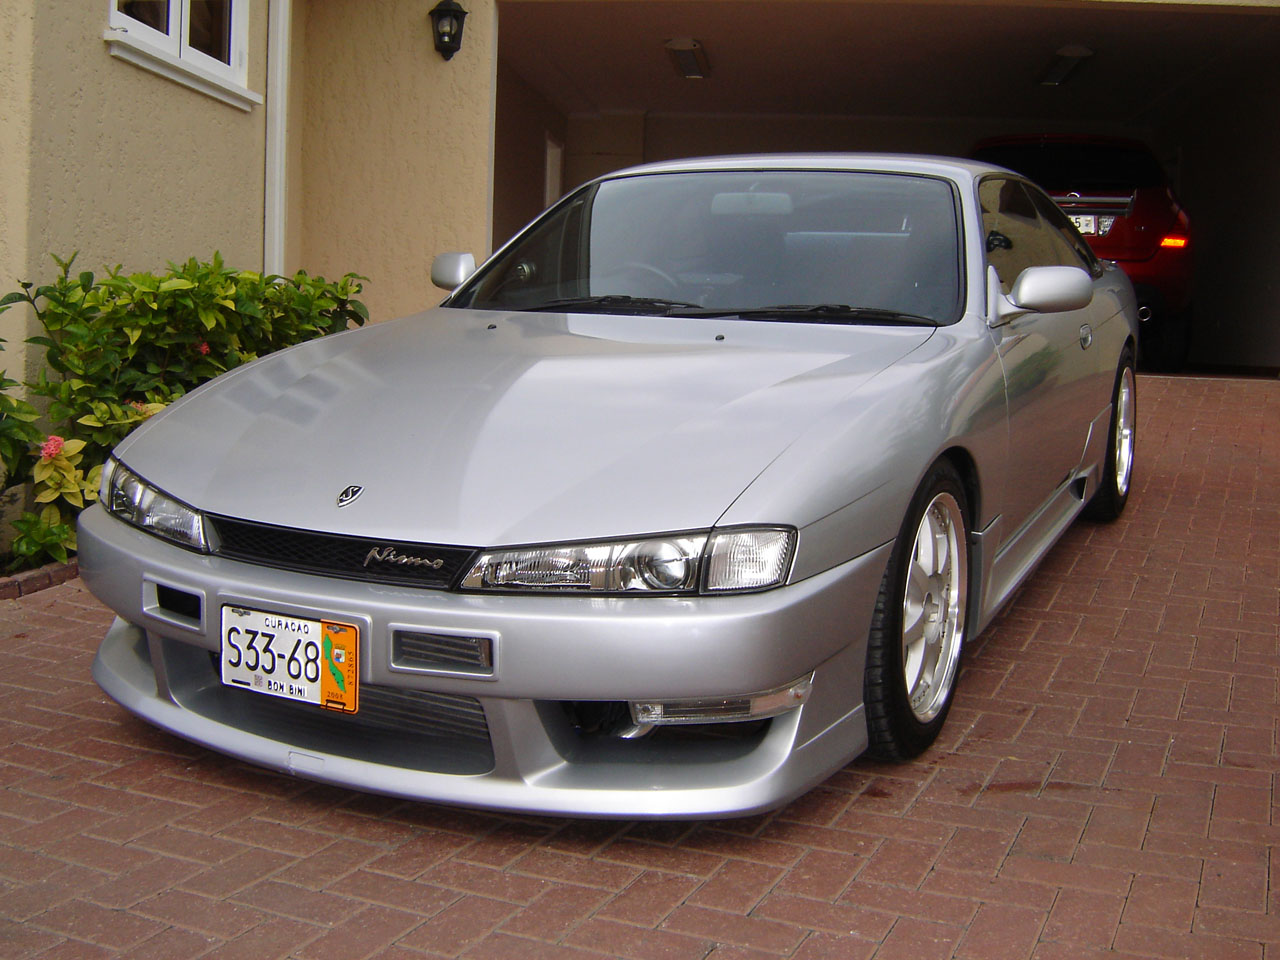  1997 Nissan Silvia S14